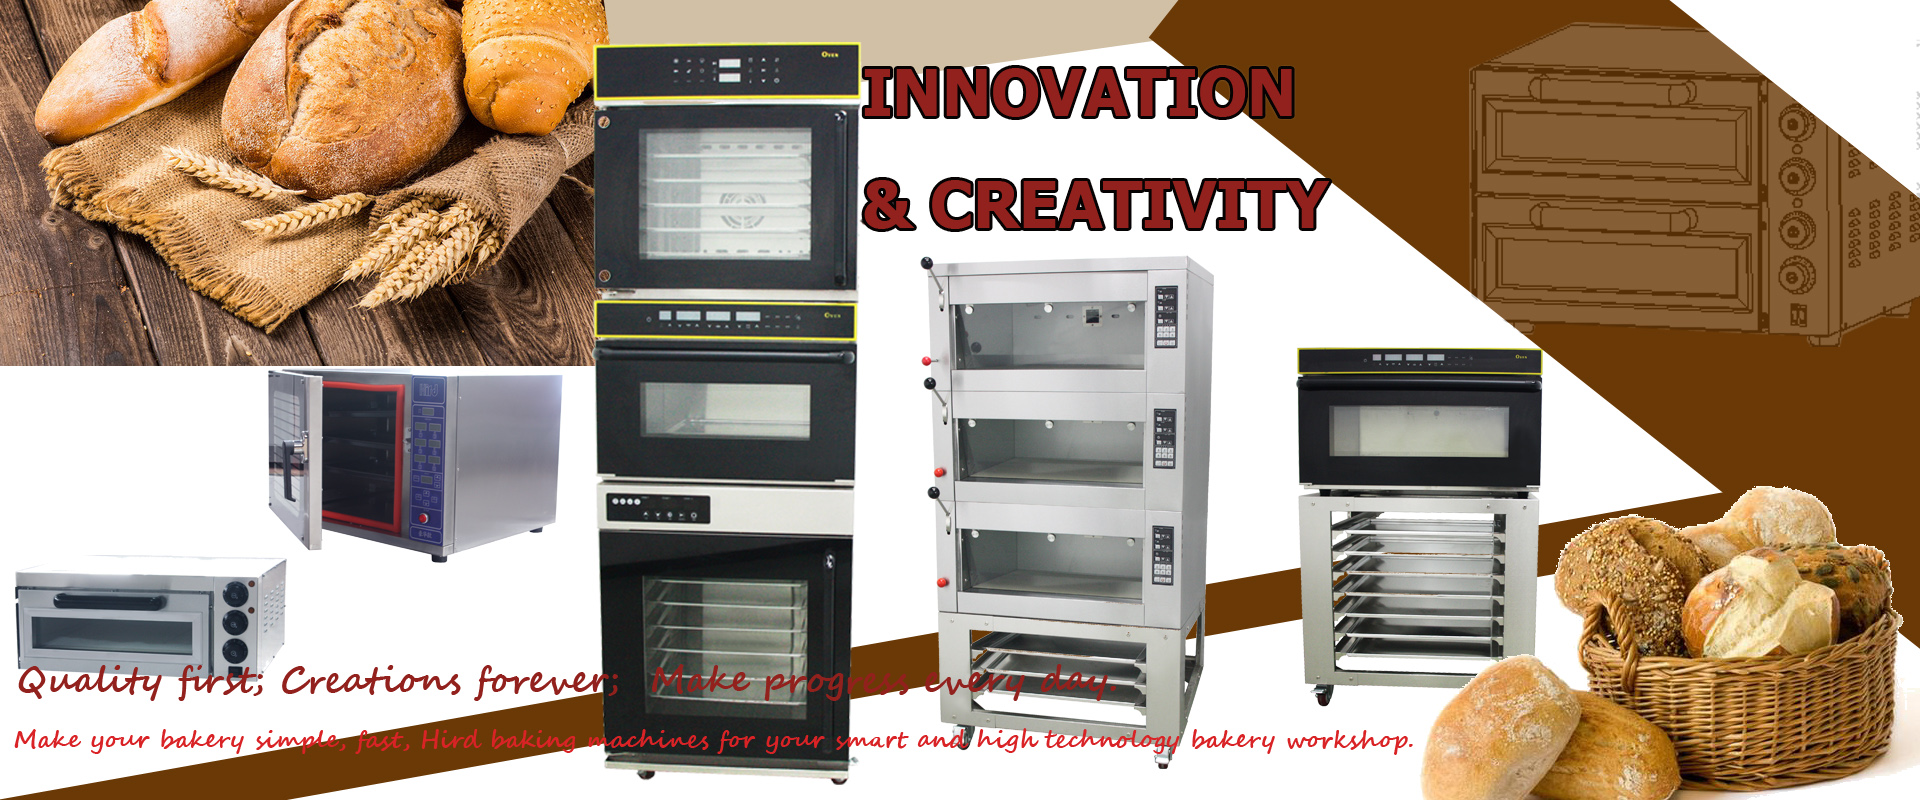 Hird Bakery machines for smart bakery workshop